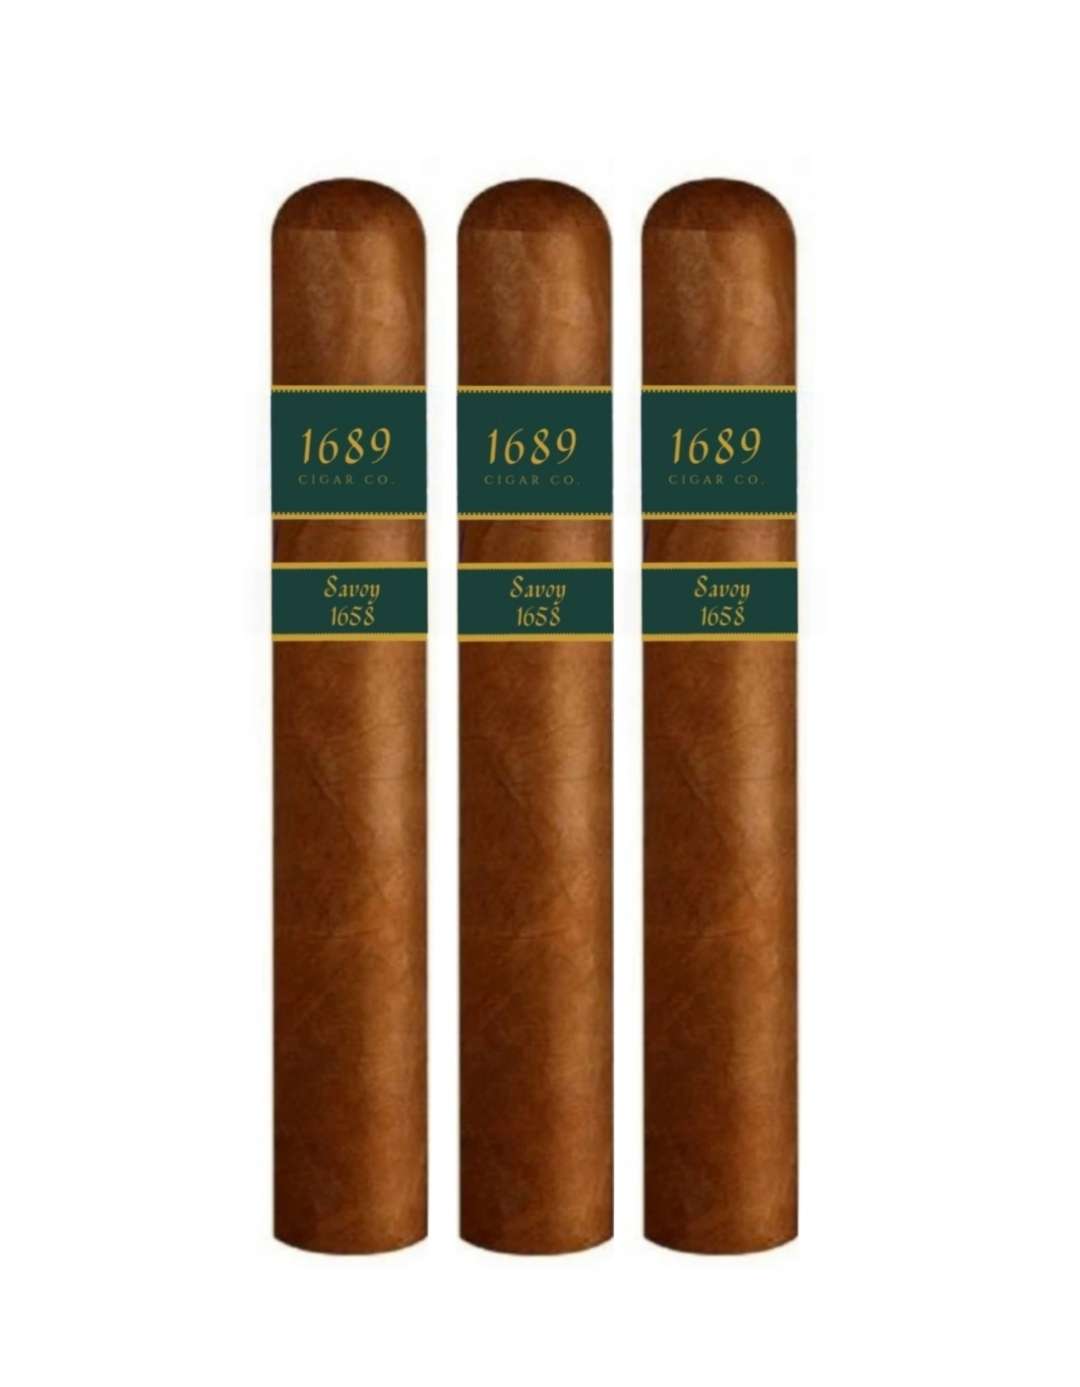 Savoy 1658 "1689 Cigar Co."